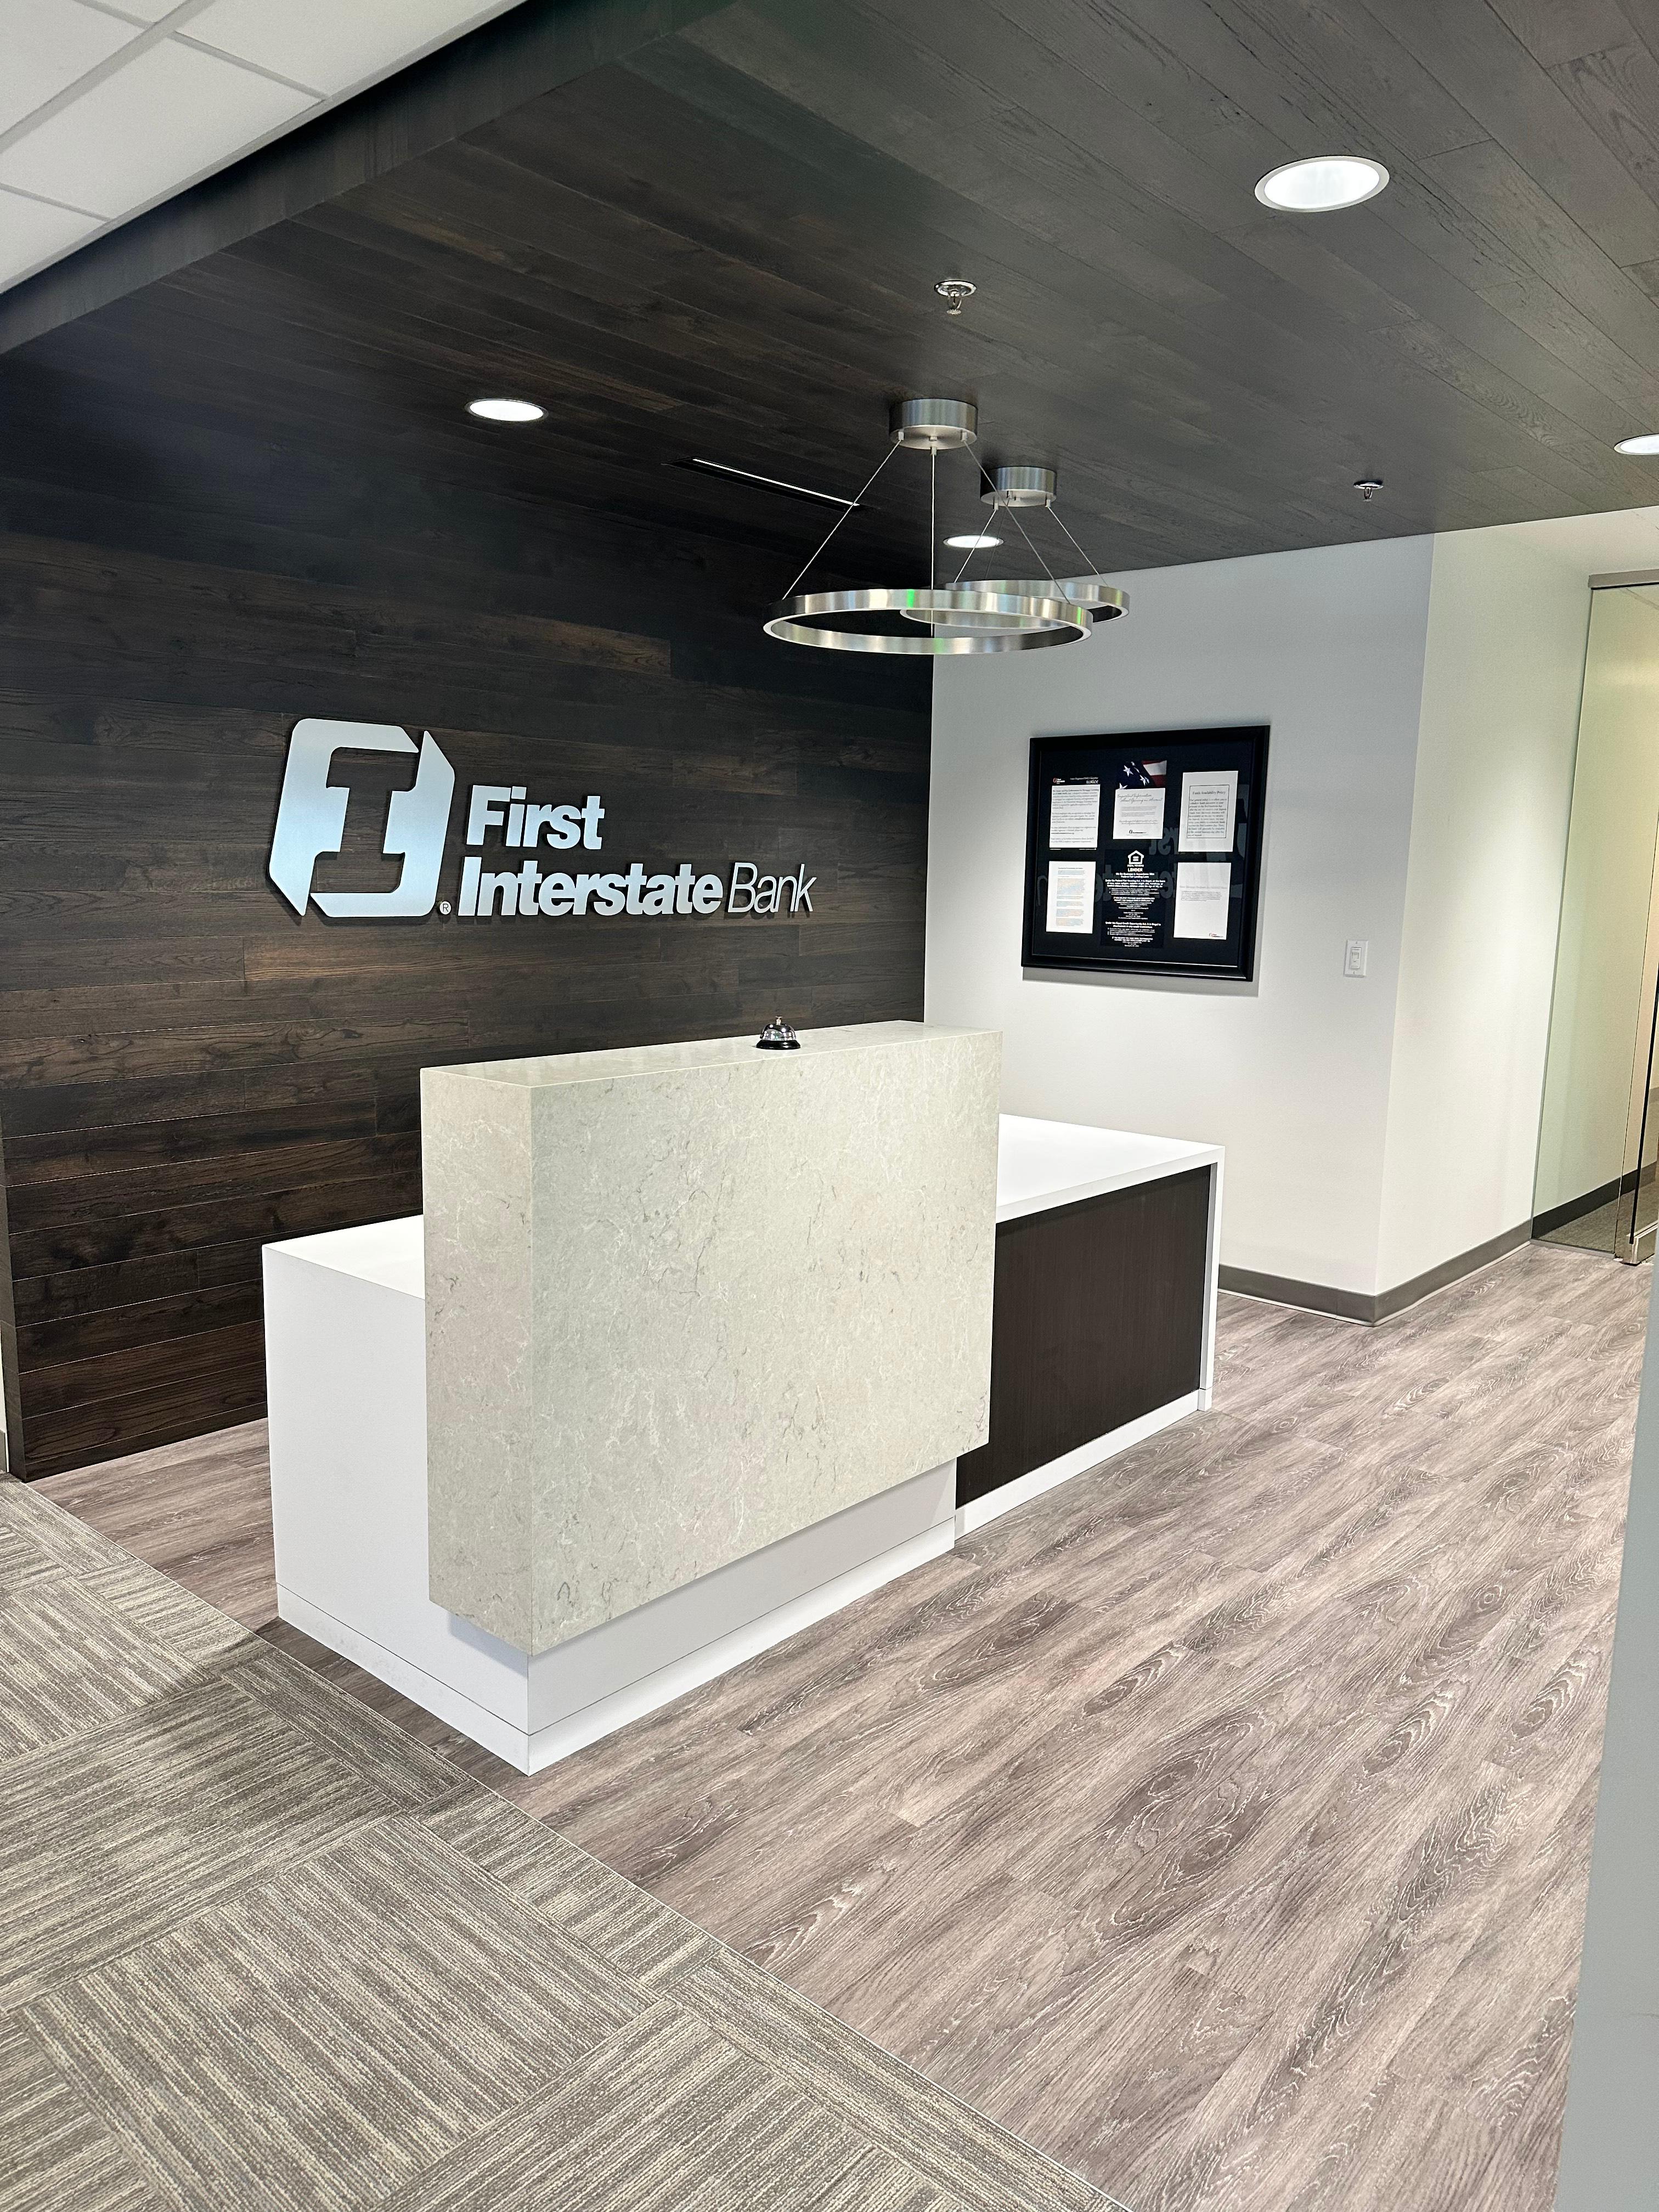 Image of First Interstate Bank in Seattle, Washington.